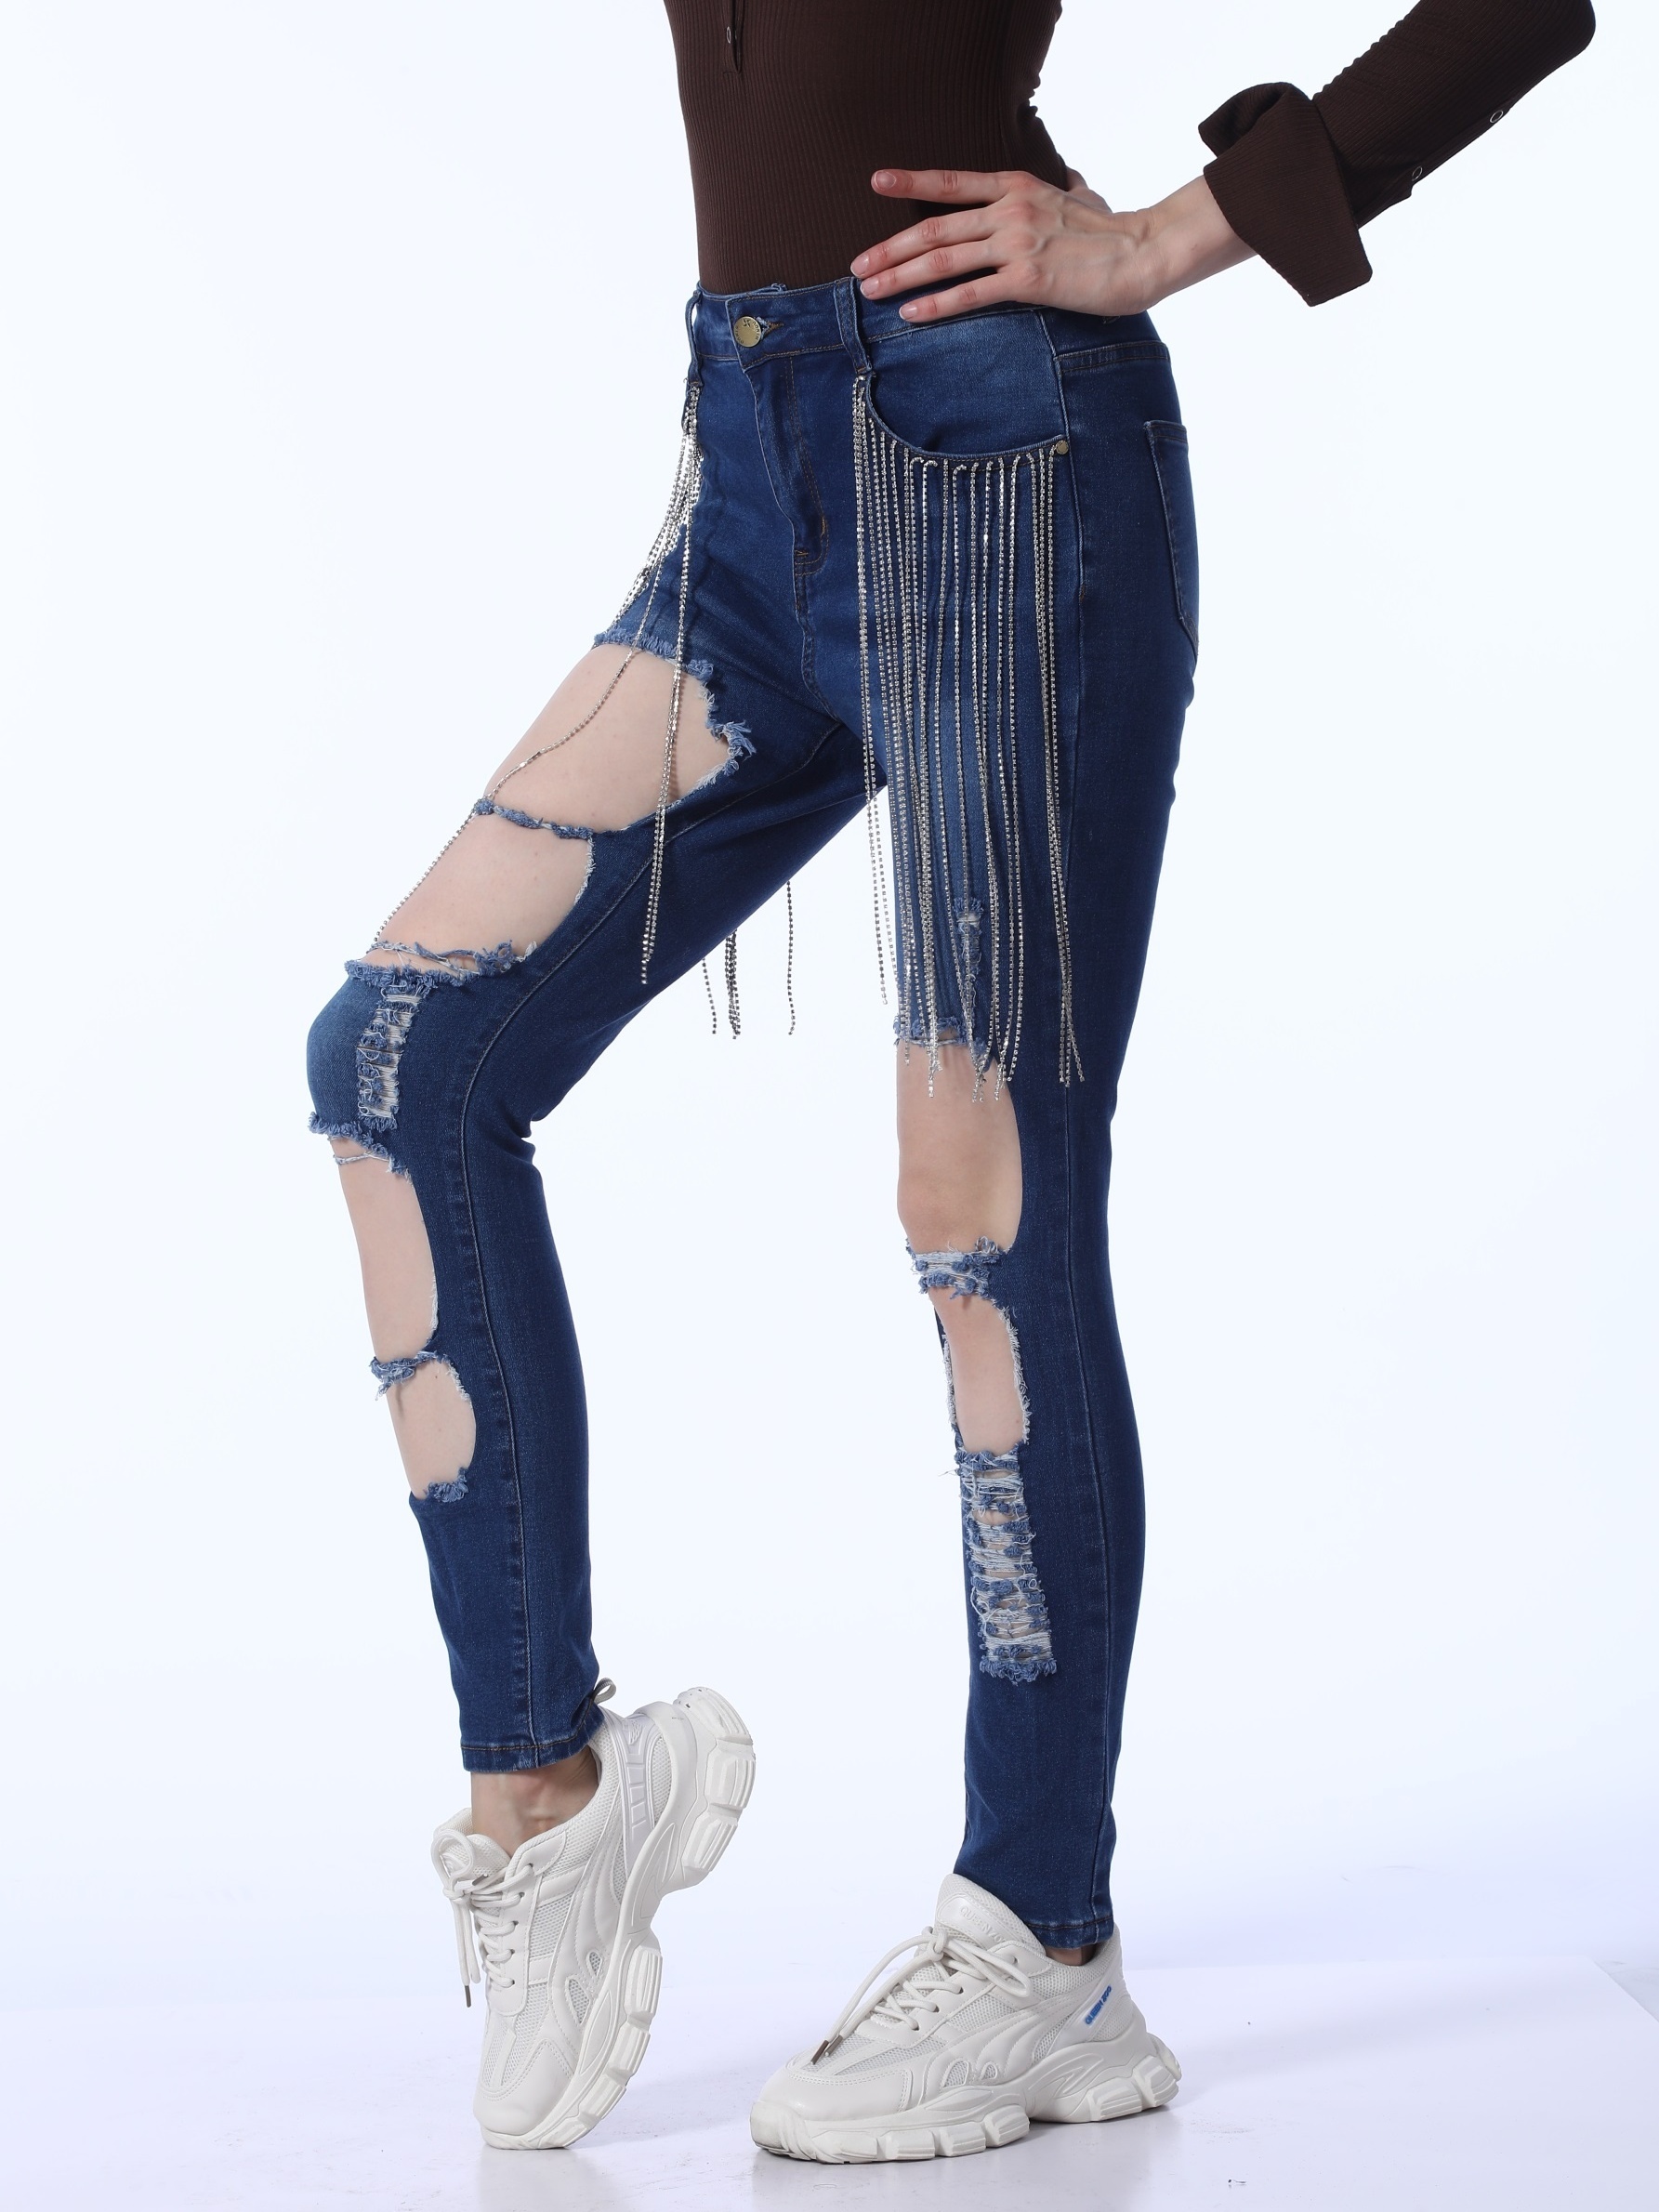  XIALON Jeans for Women- Ripped Rhinestone Detail